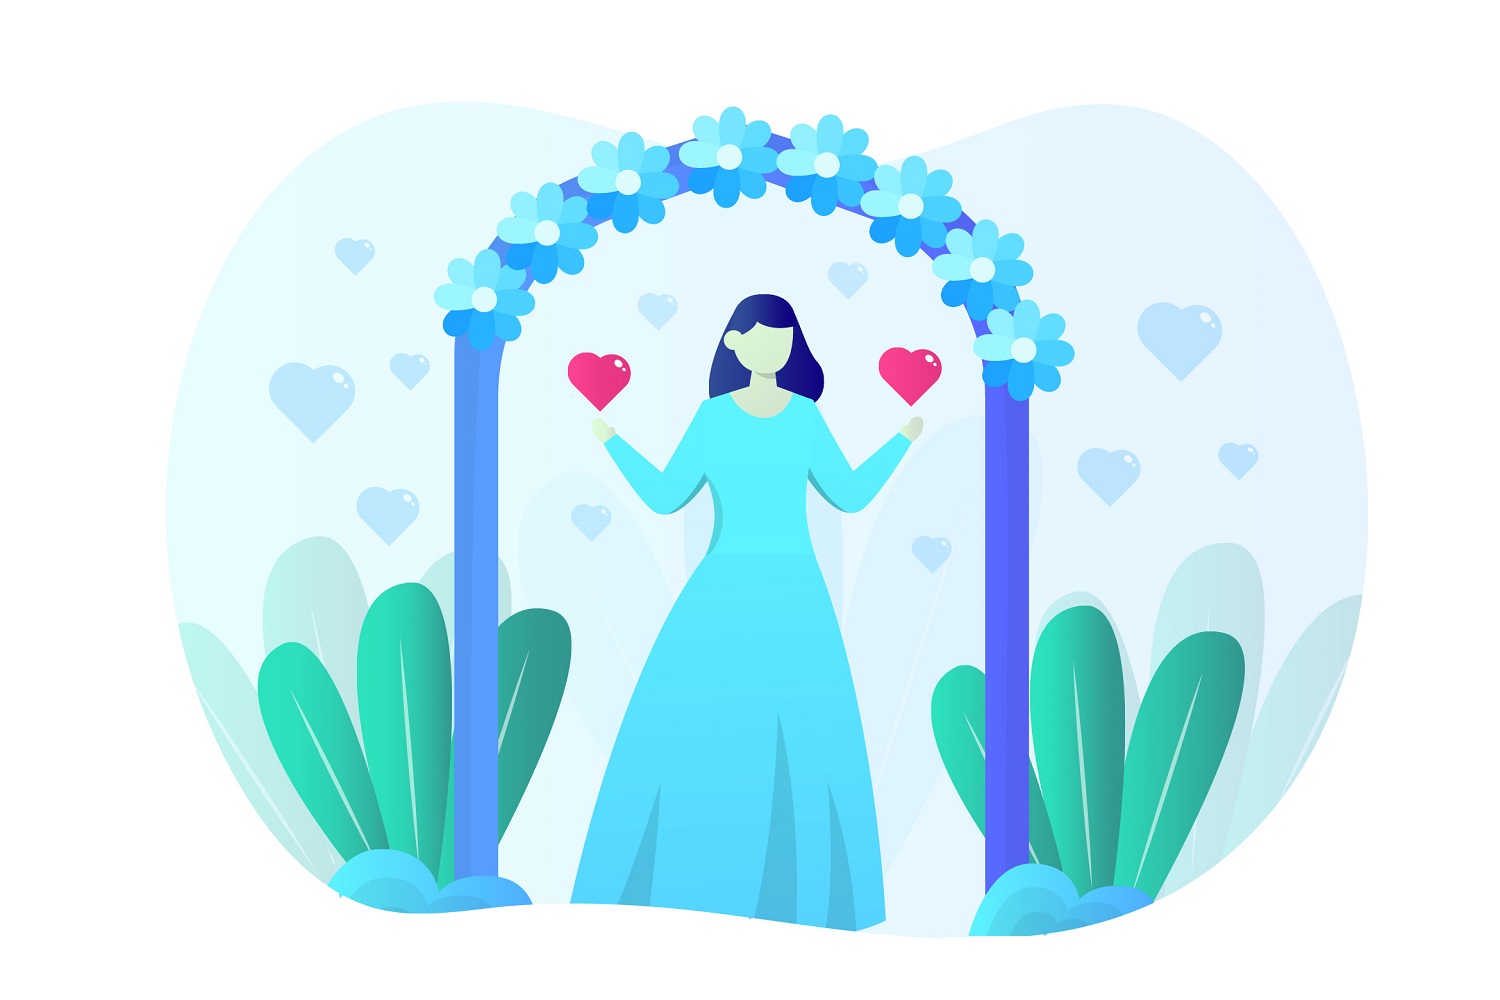 Wedding Day Flat Illustration - Vector Image